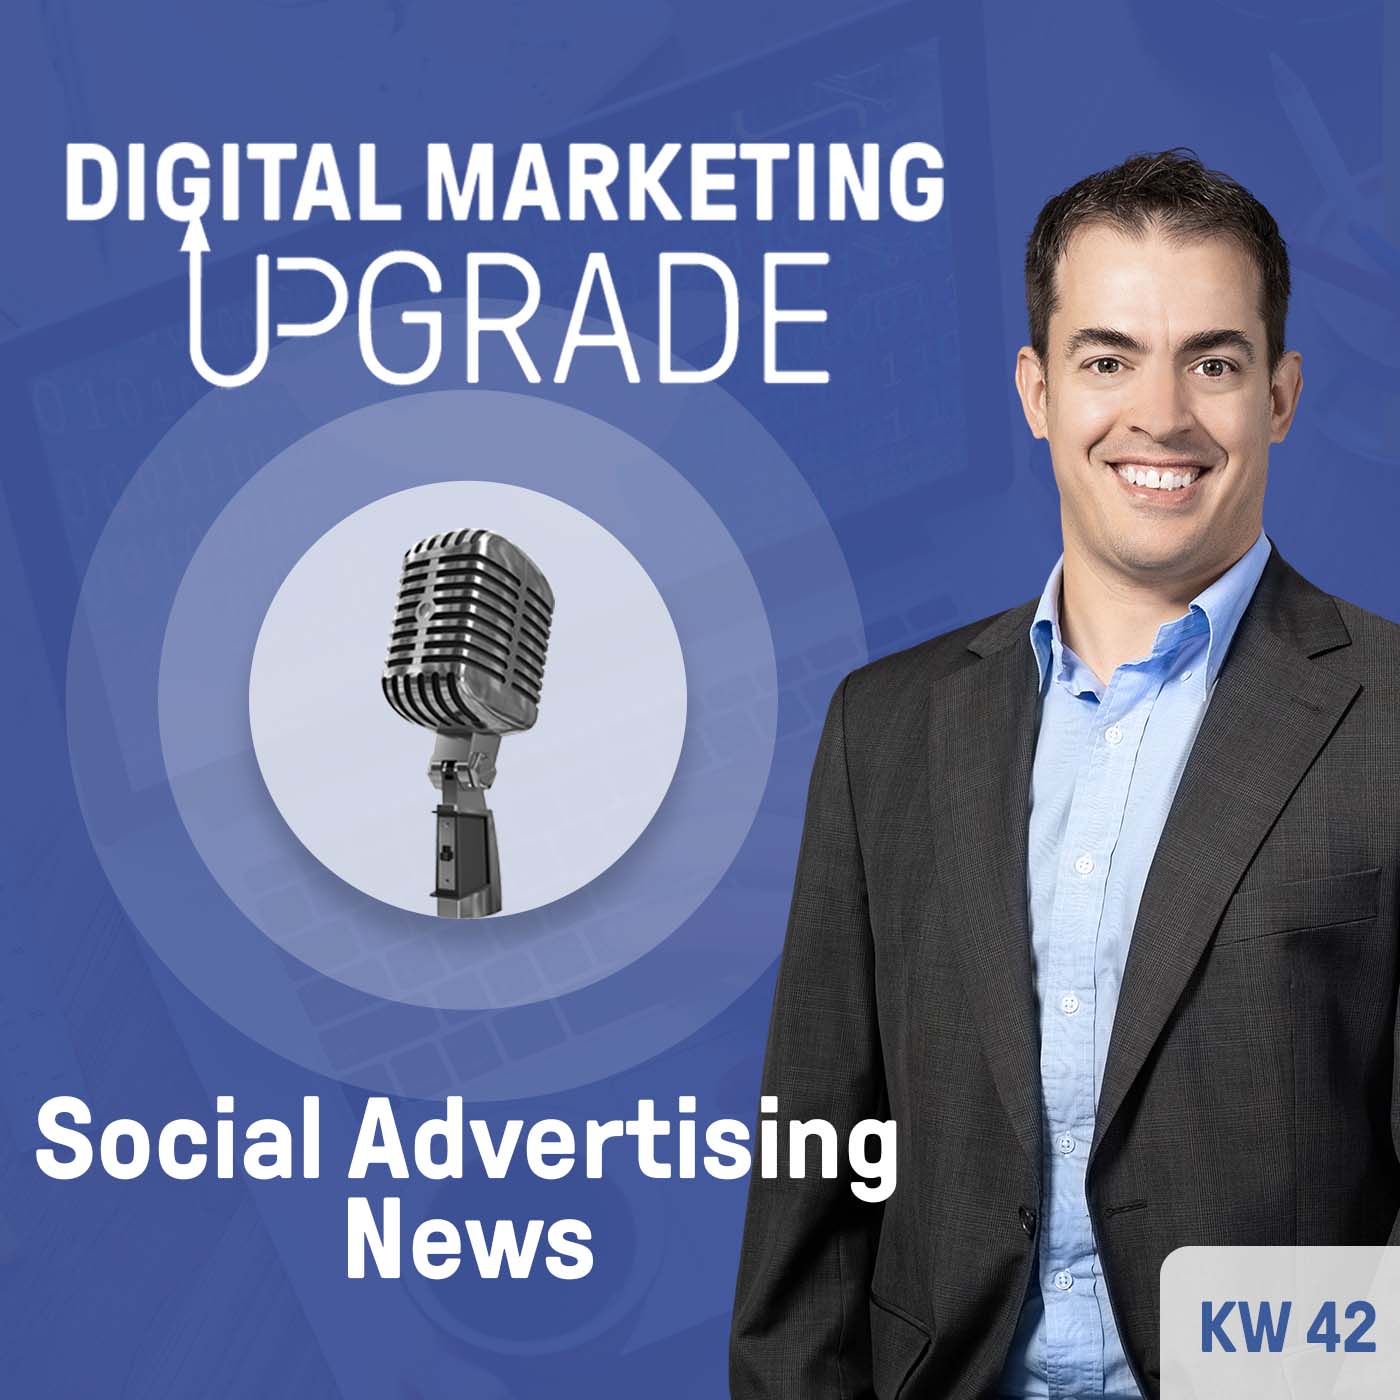 Social Advertising News - KW 42/22